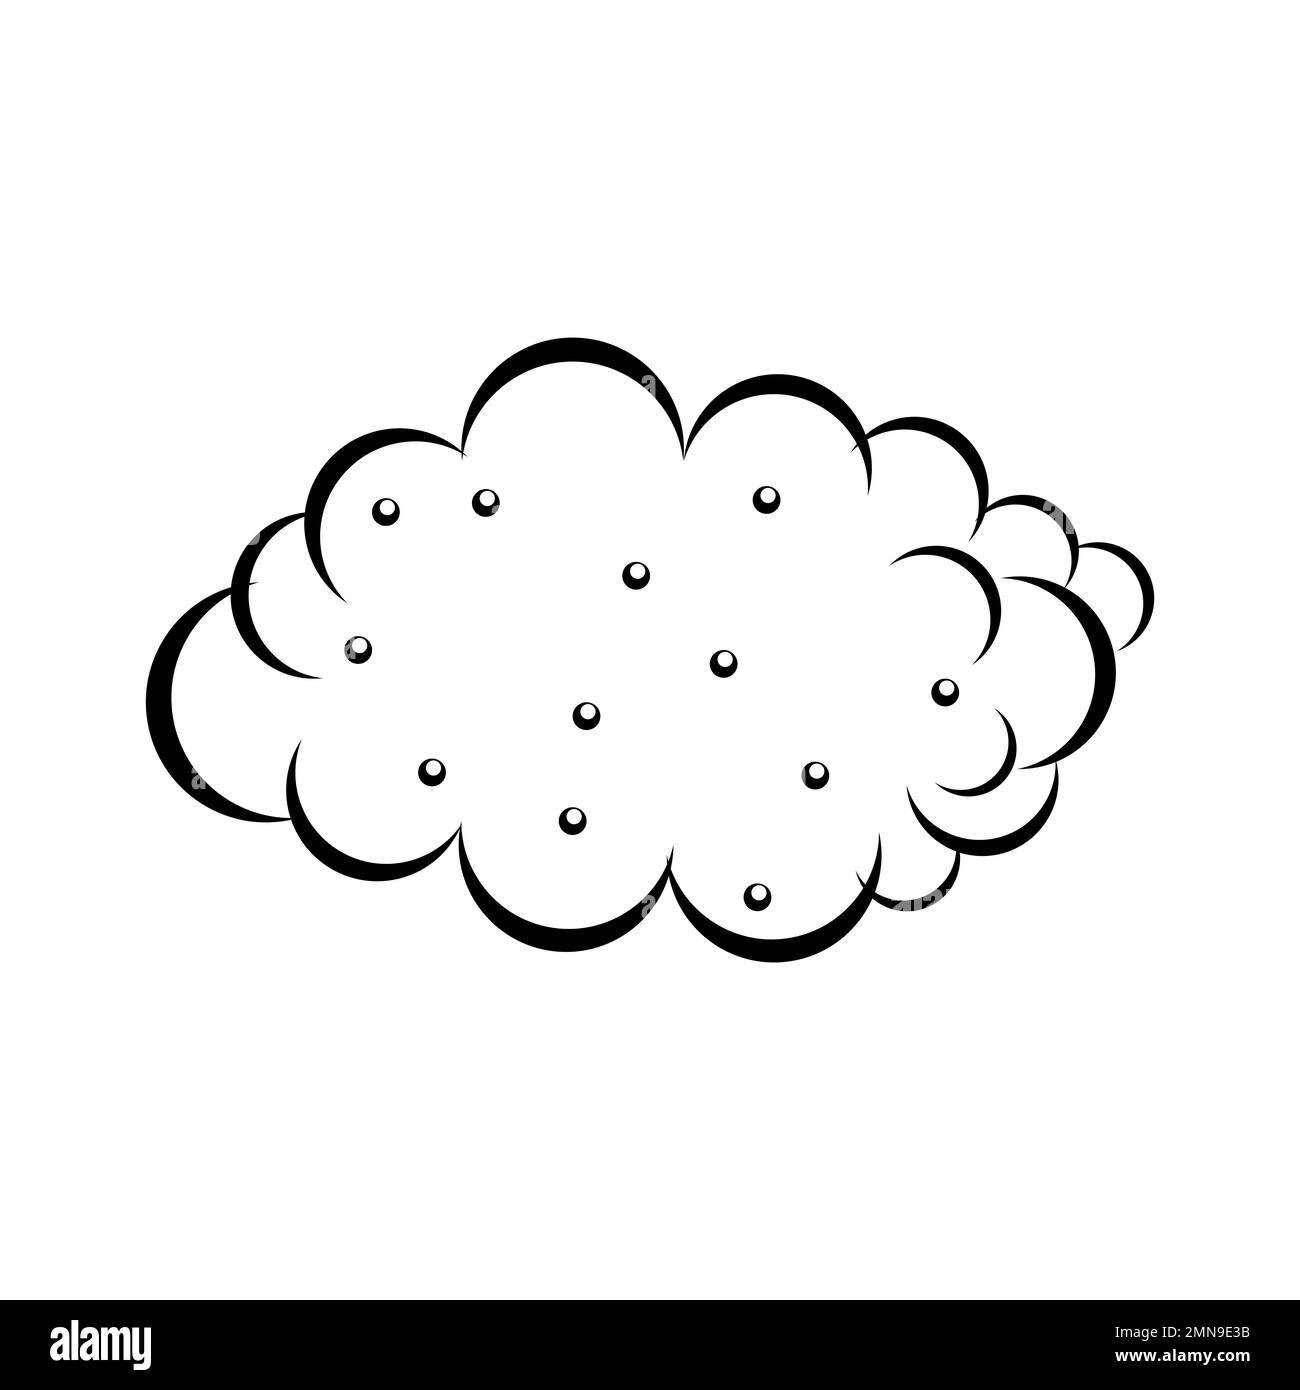 flat design bomb explosion illustration vector logo Stock Photo